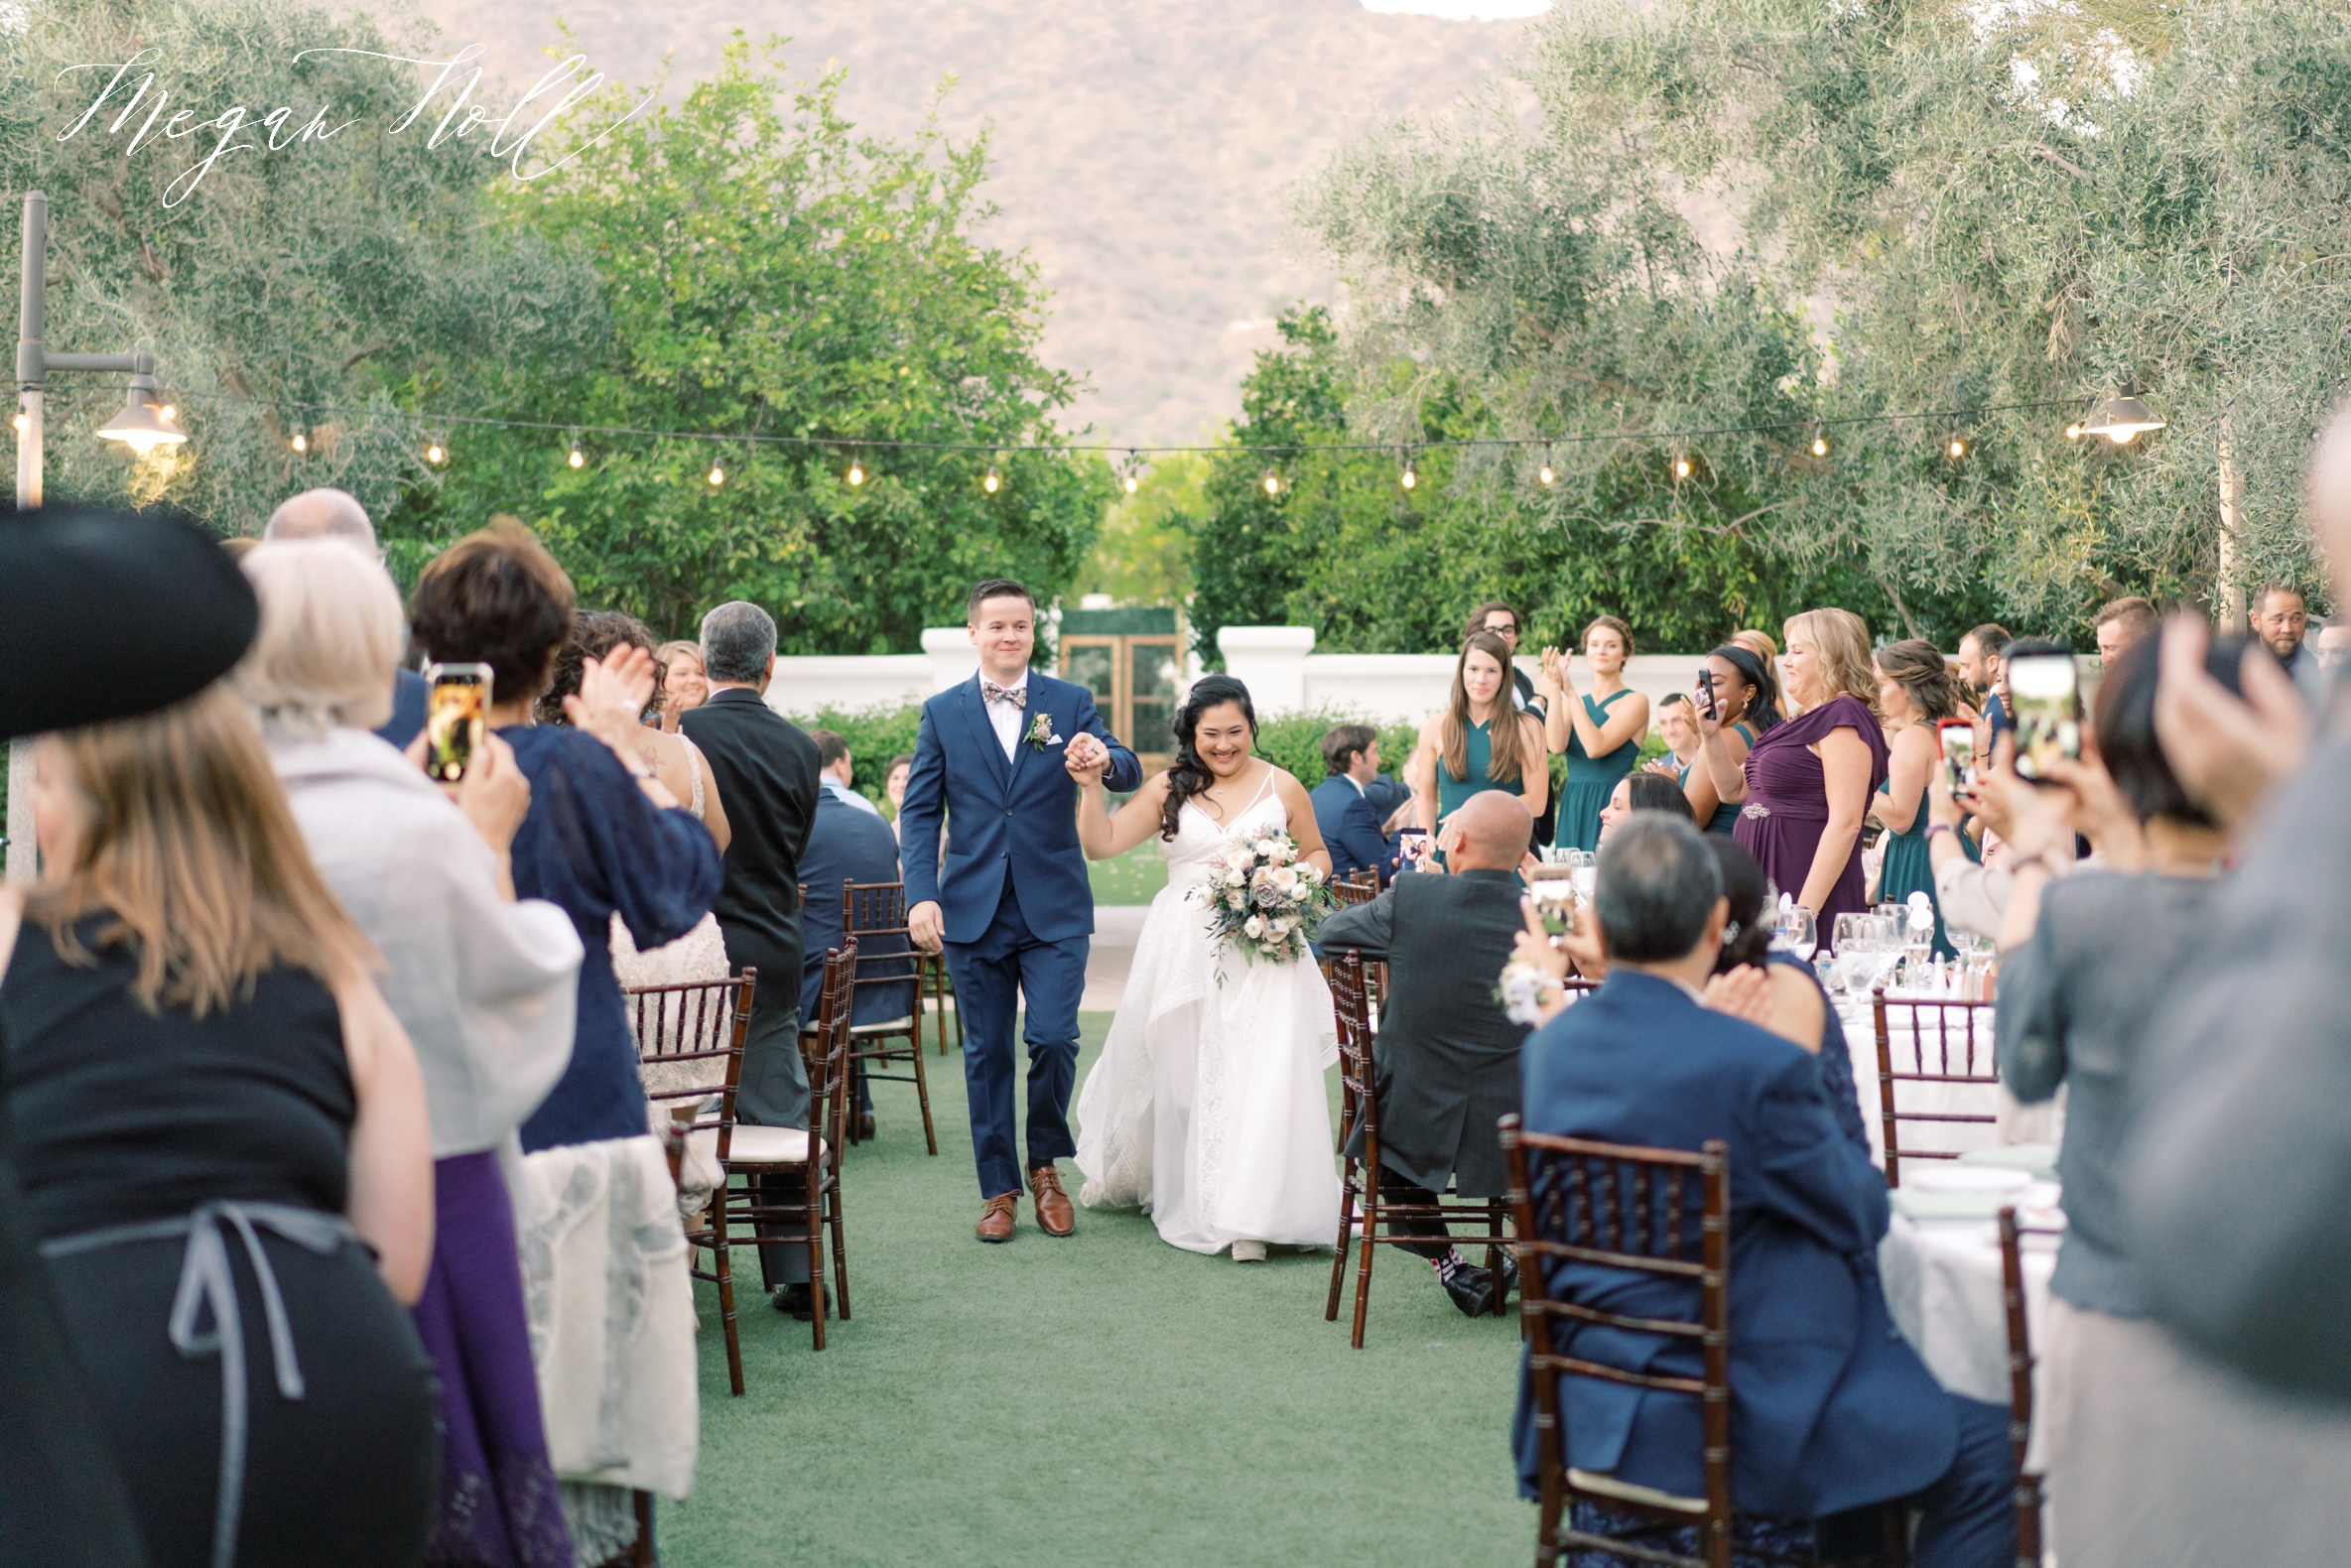 Brad Vanover and Tess Akgunduz announced at their wedding reception at El Chorro